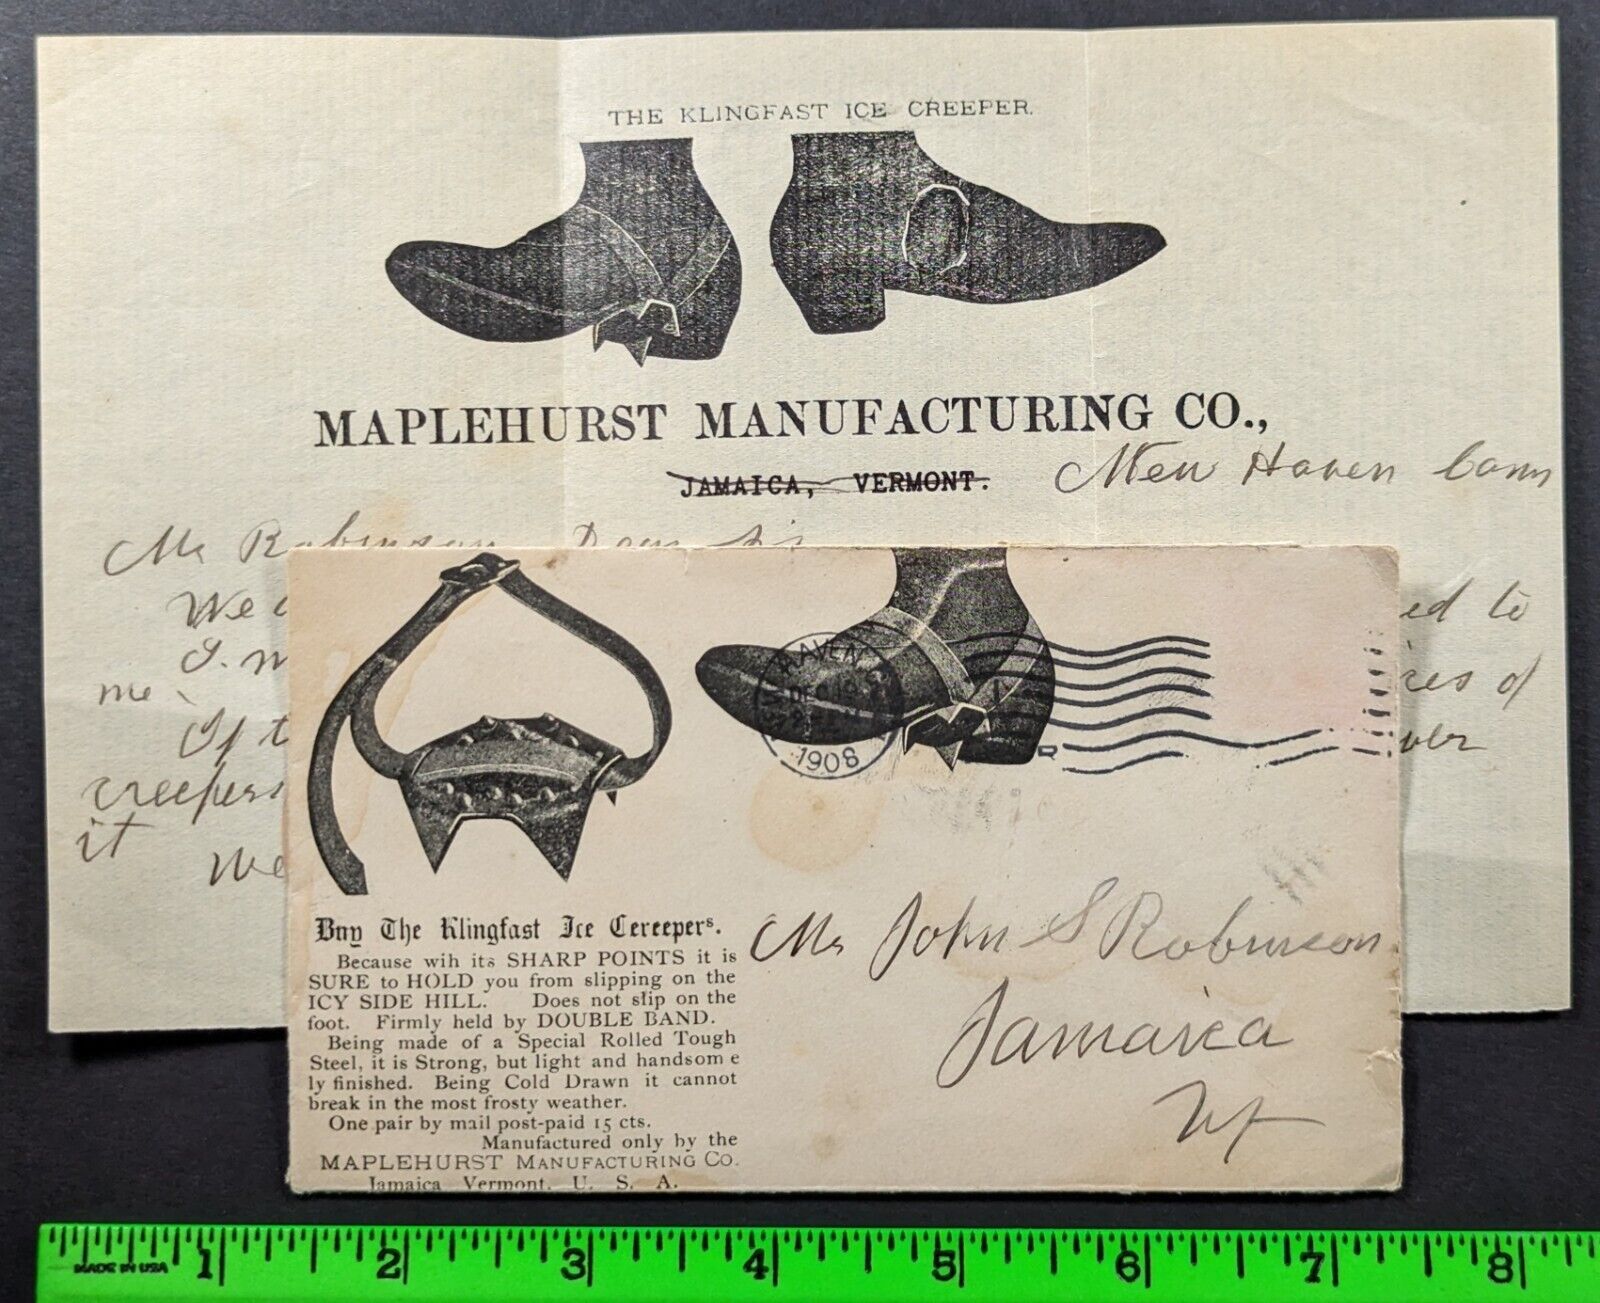 Vintage 1908 Klingfast Ice Cereeper Jamaica Vermont Envelope Letter